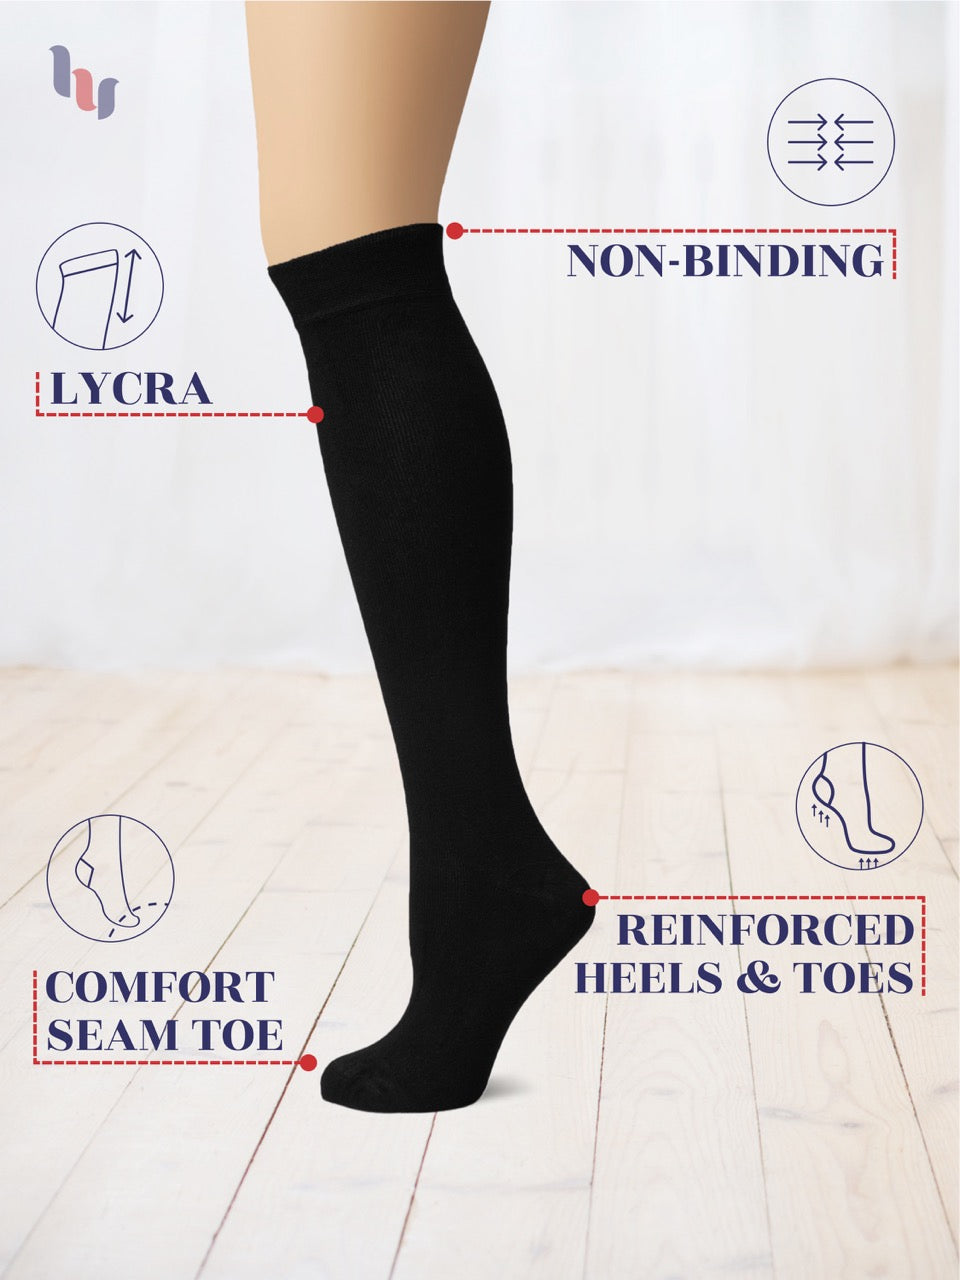 Knee-High Bamboo Dress Socks for Women, 4 Pairs